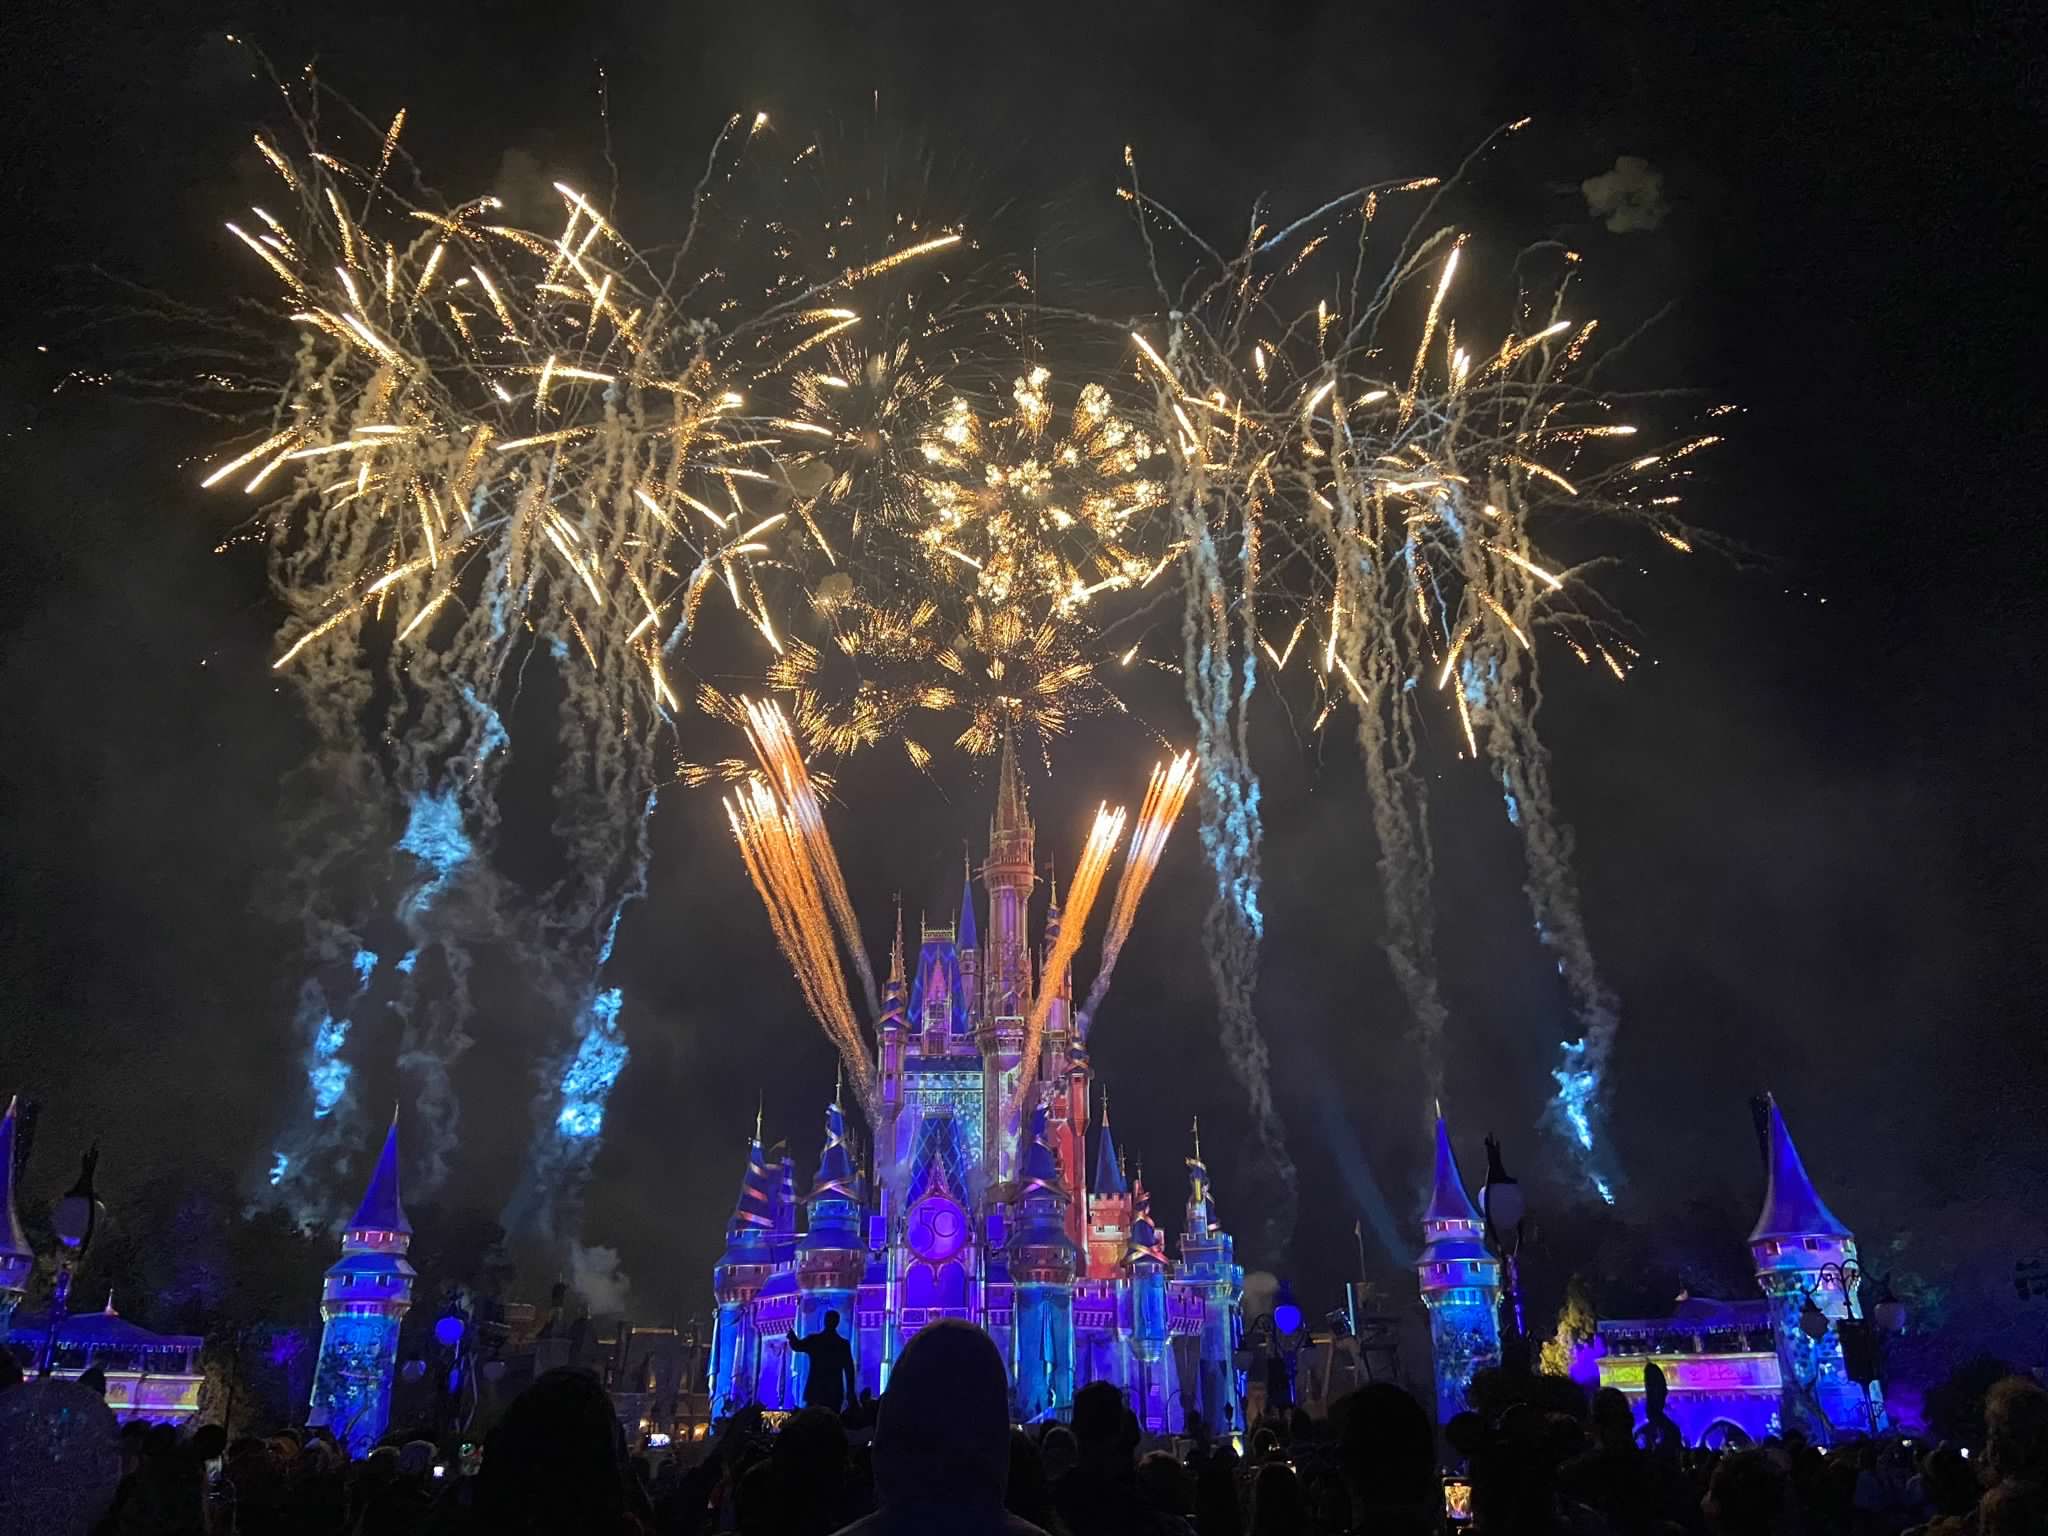 DIsney World Florida fireworks at the Magic Kingdom